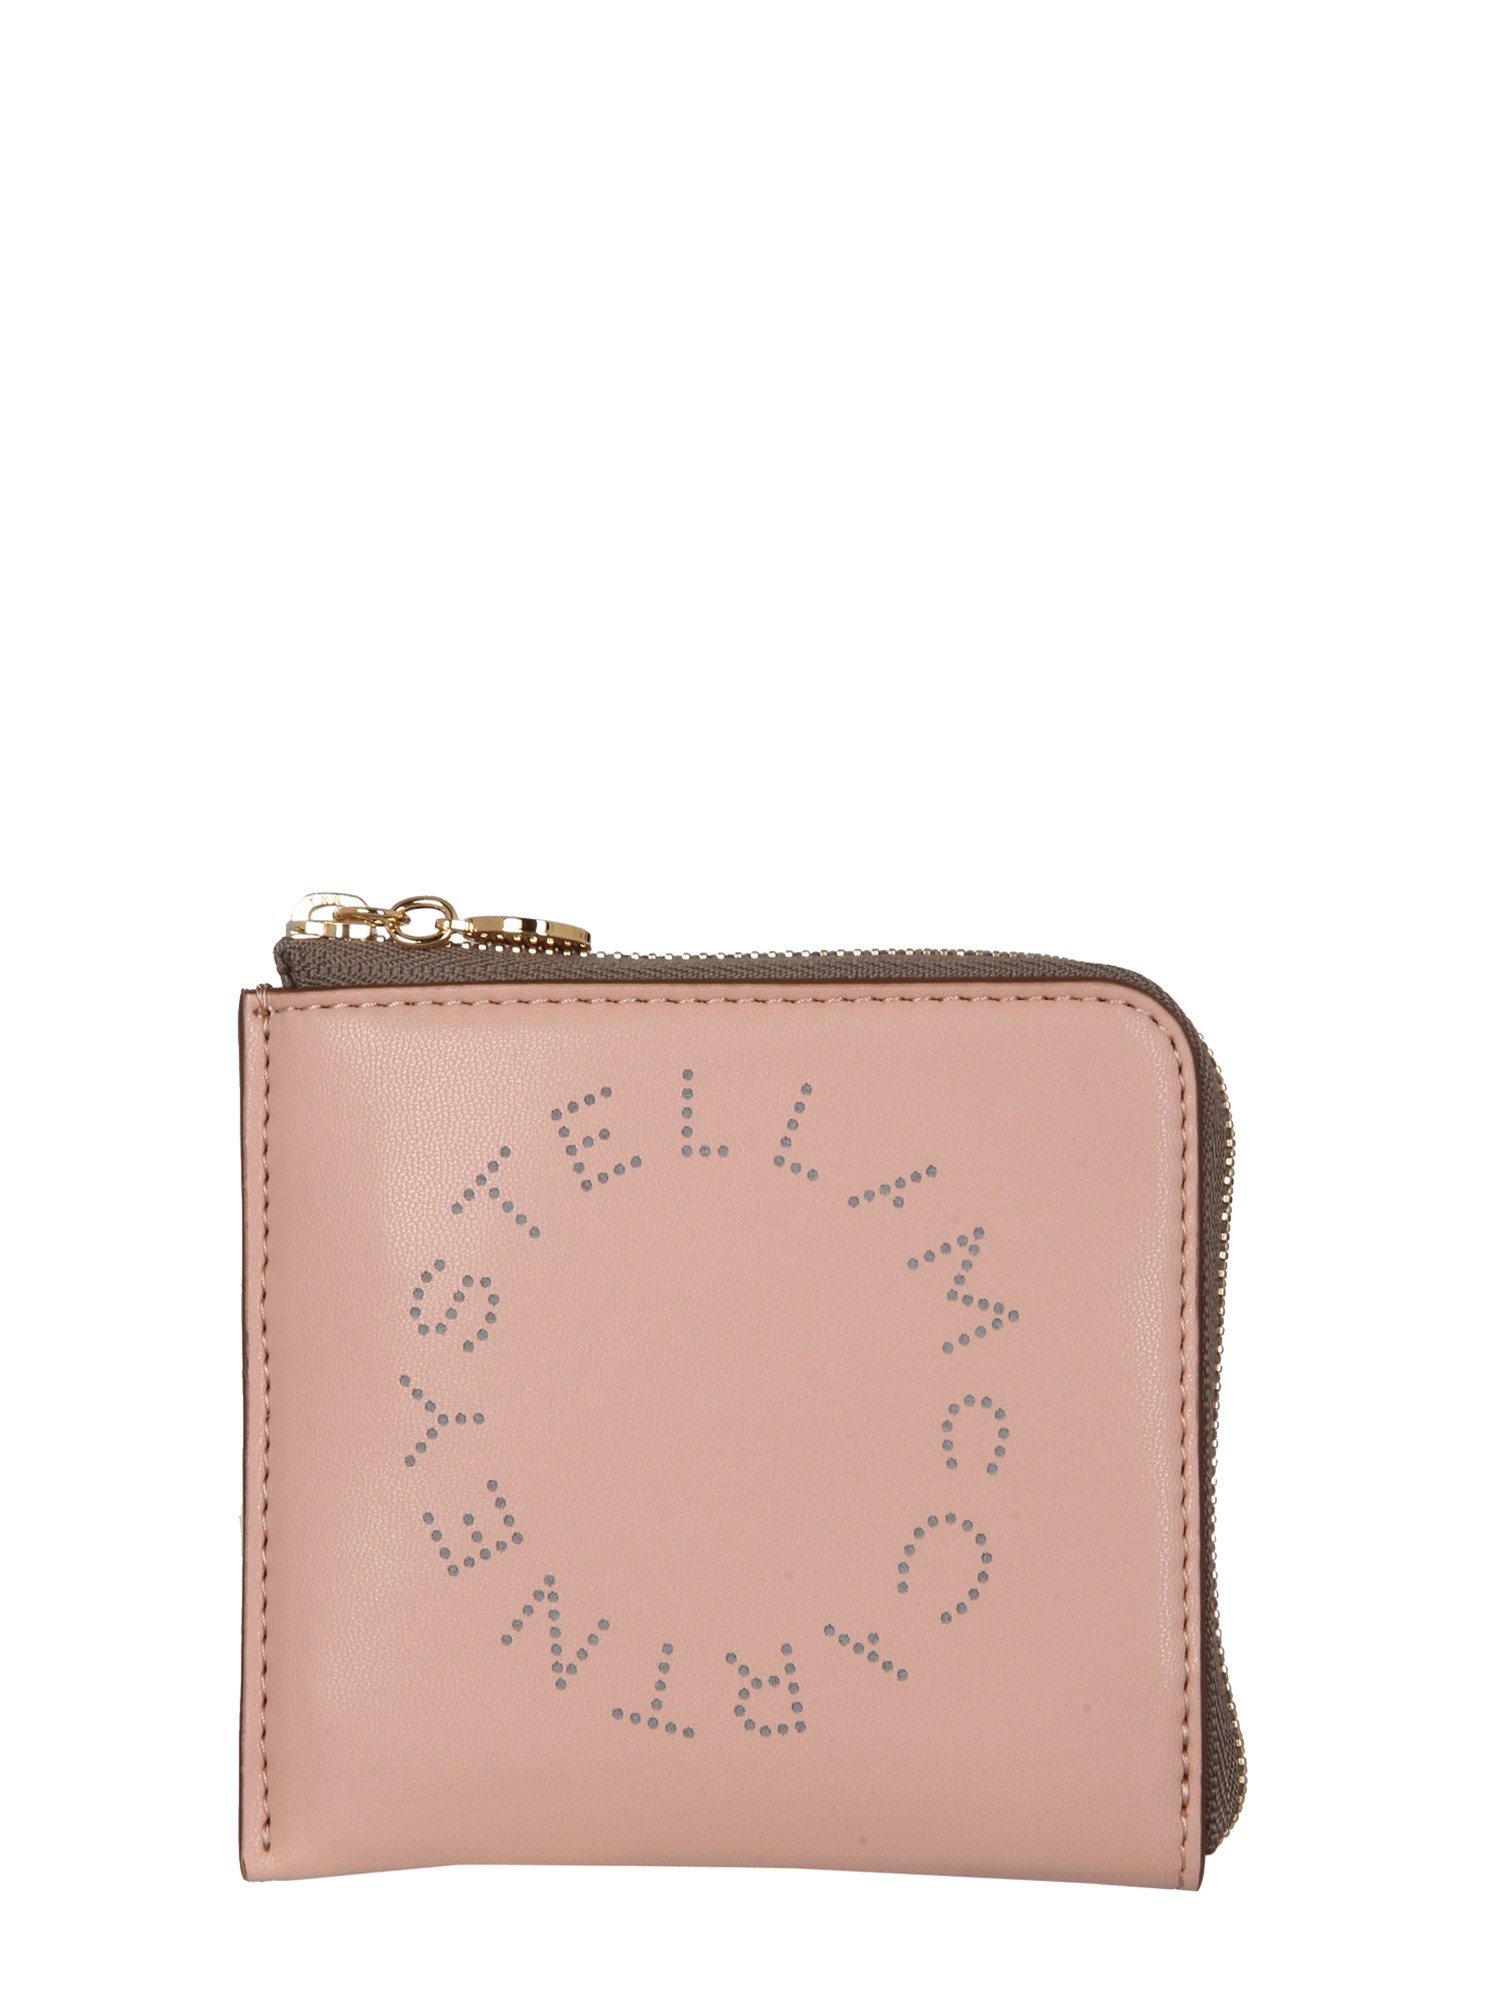 stella mccartney wallet with zip